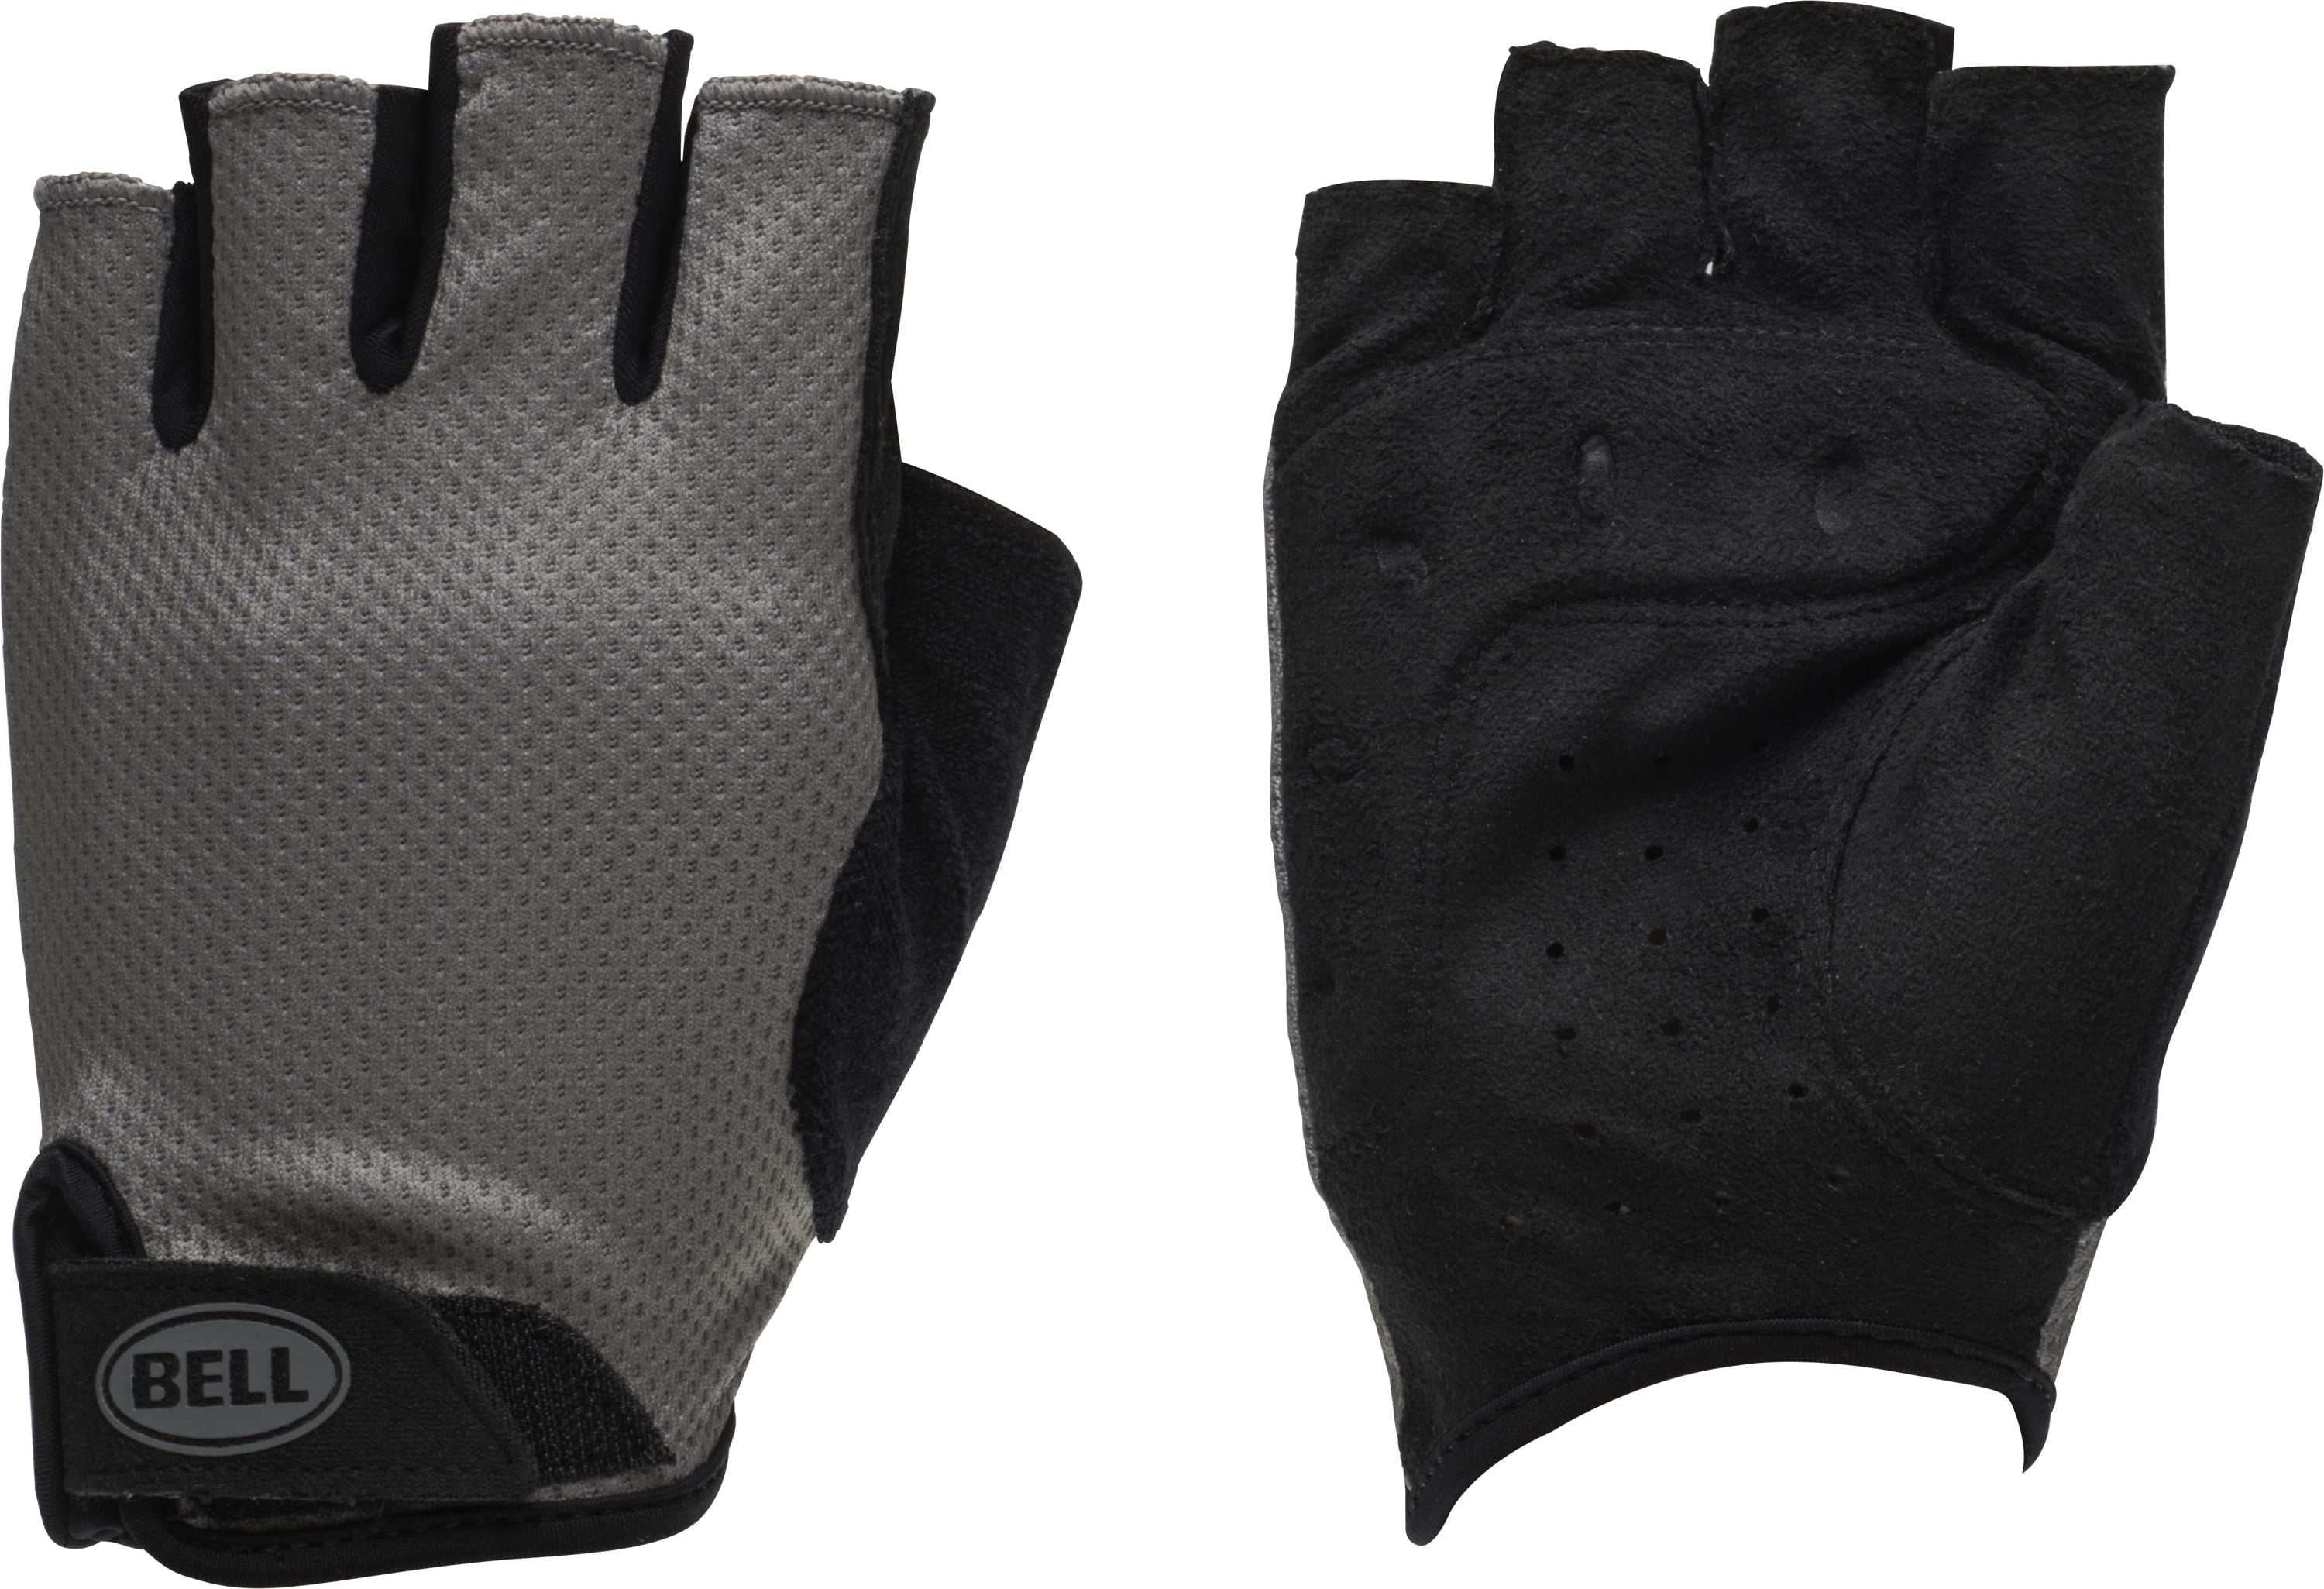 Cycling Gloves Half Finger Motorcycle Golve Bike Bicycle Riding Size M-XL Black 